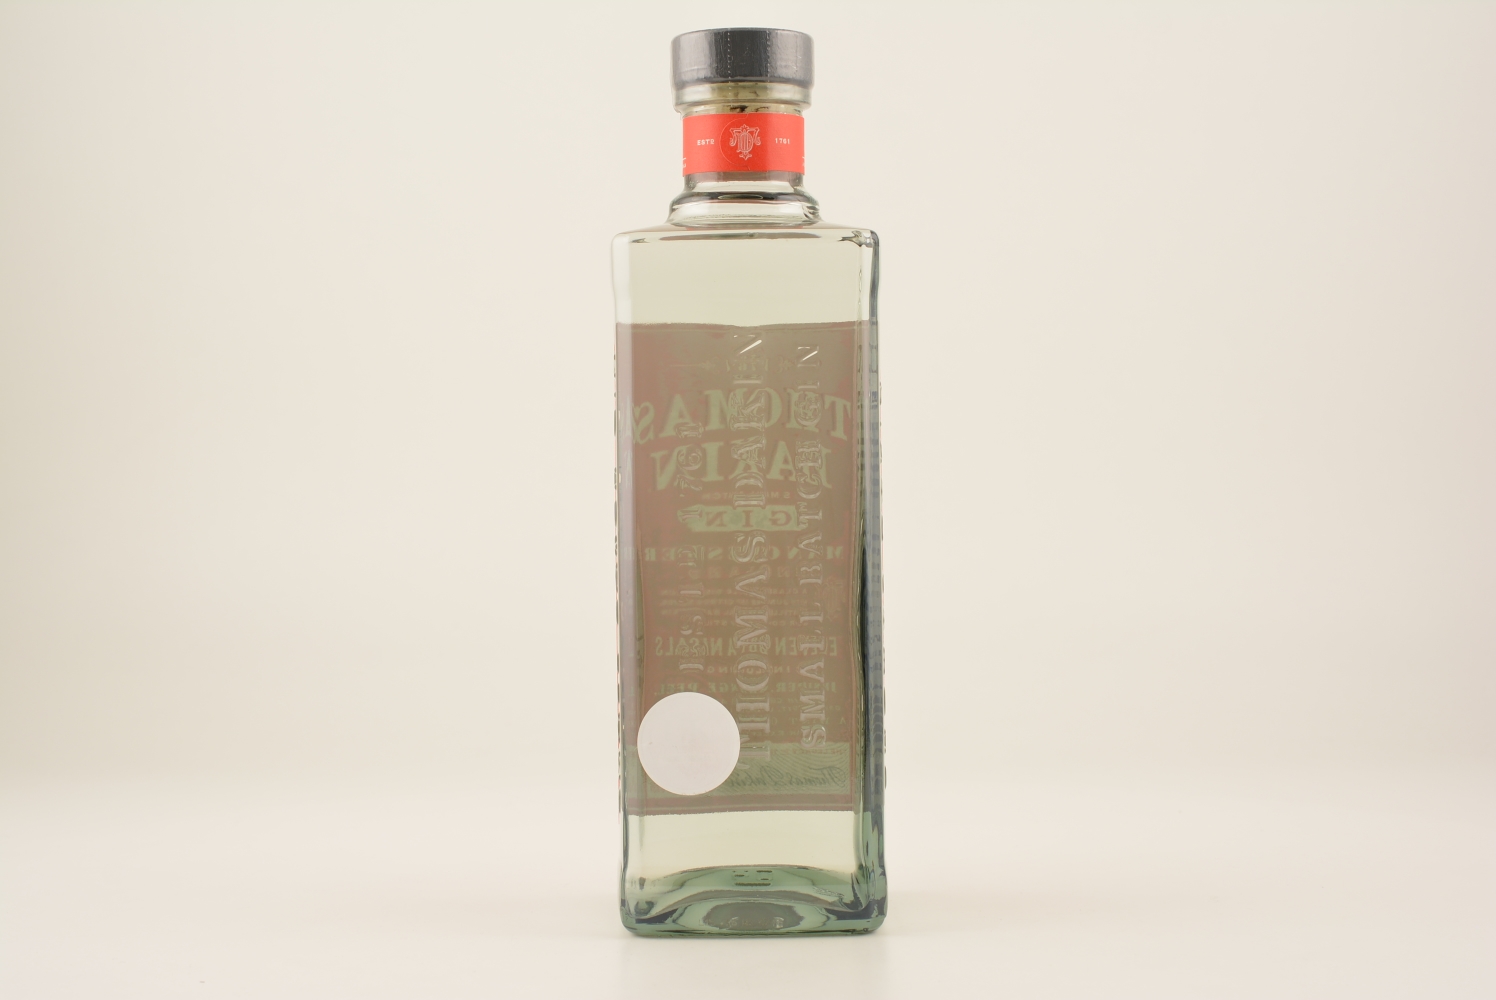 Thomas Dakin Small Batch Gin 42% 0,7l